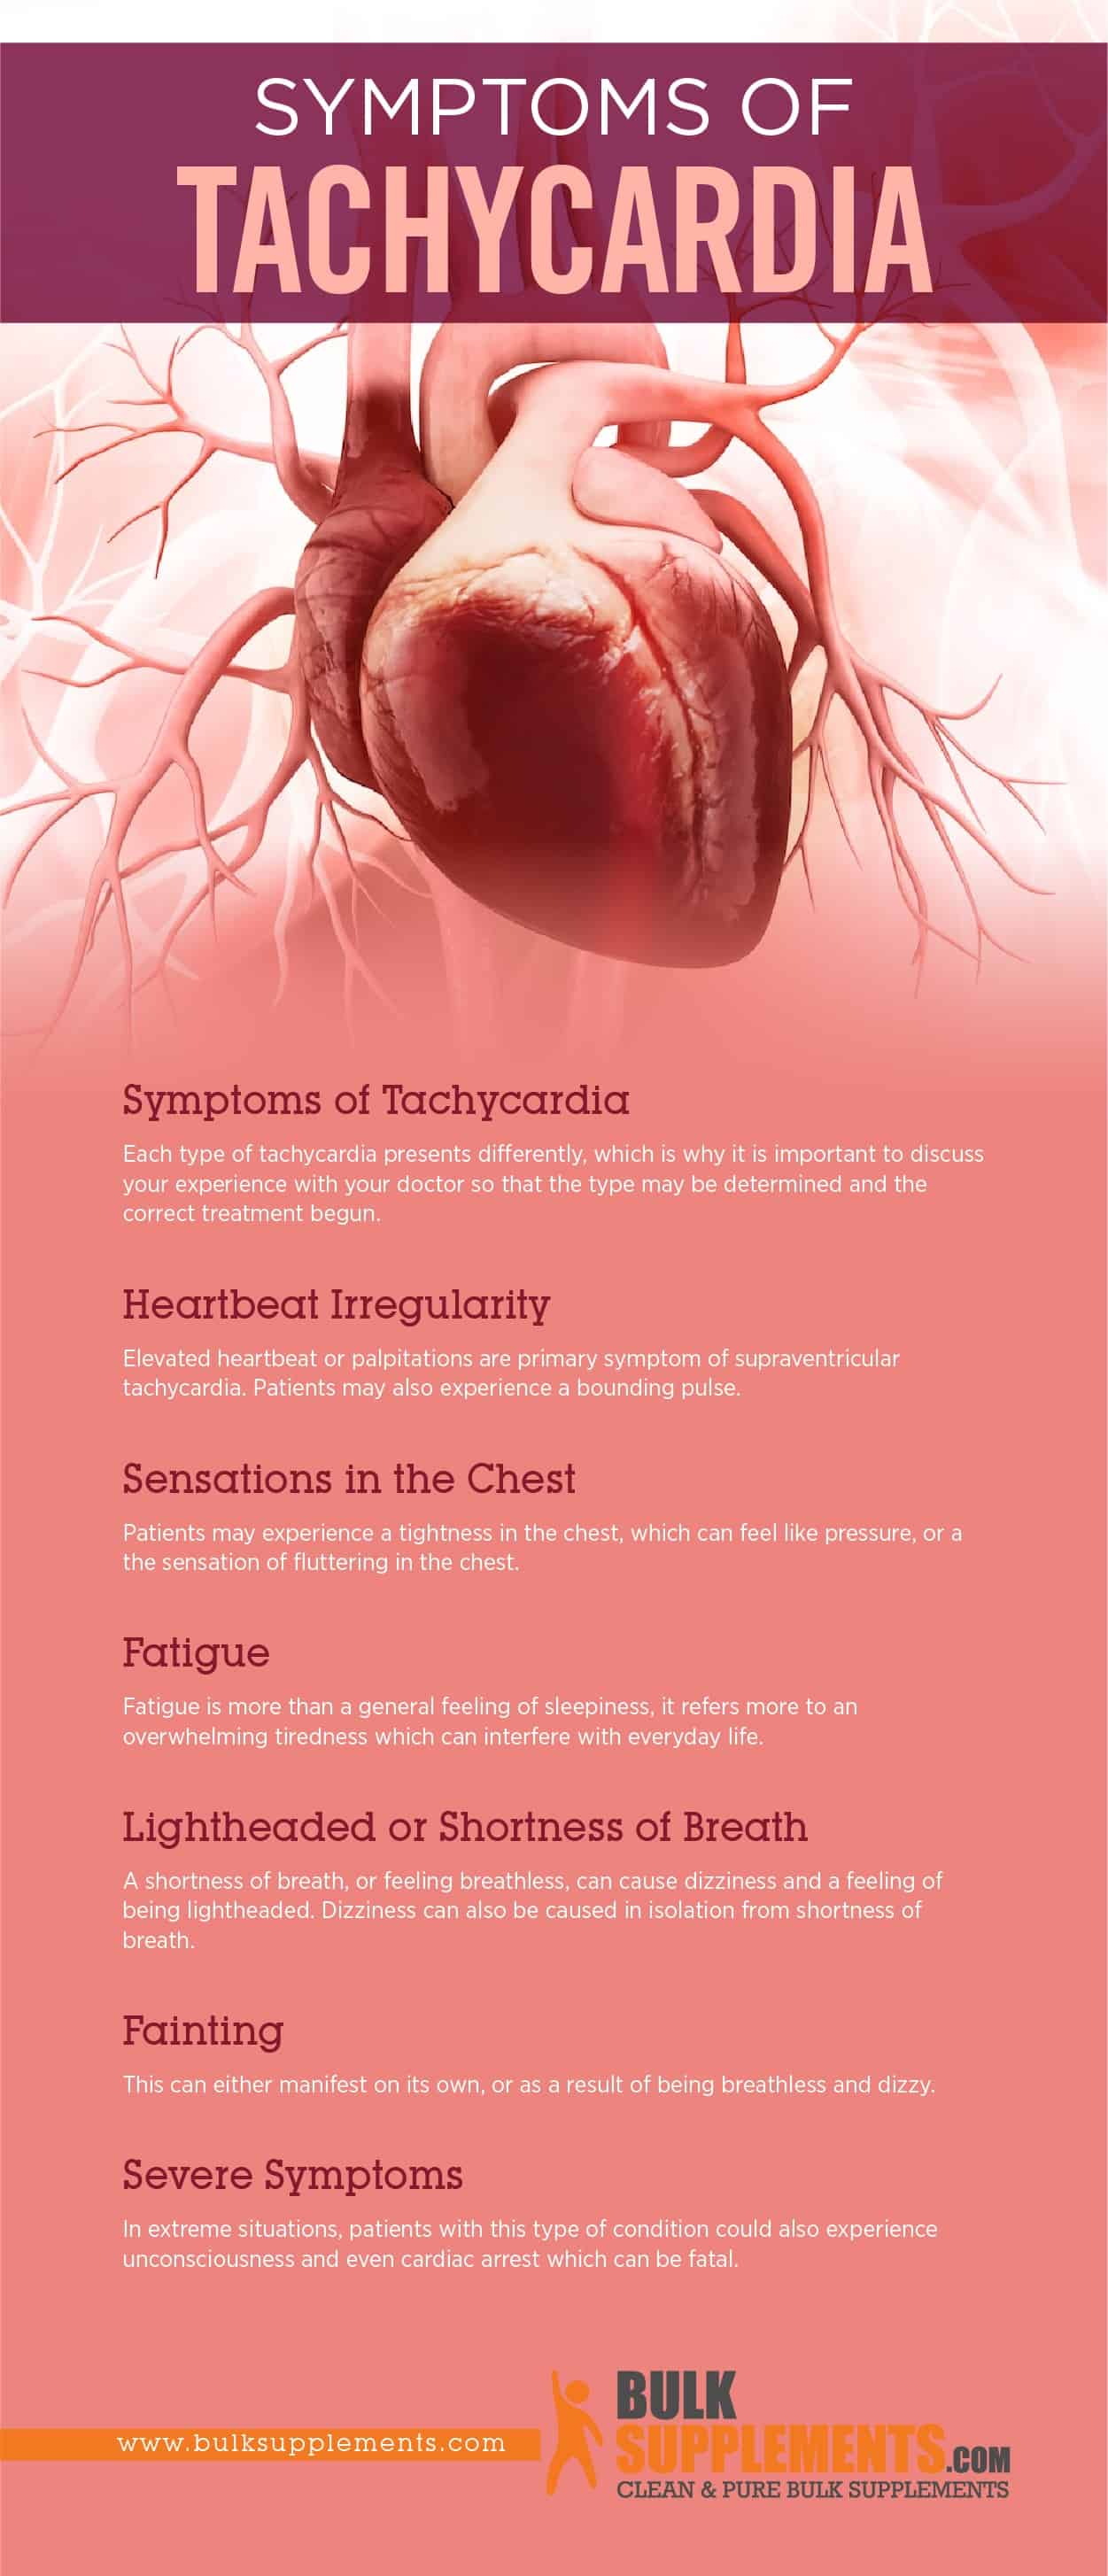 Symptoms of Tachycardia